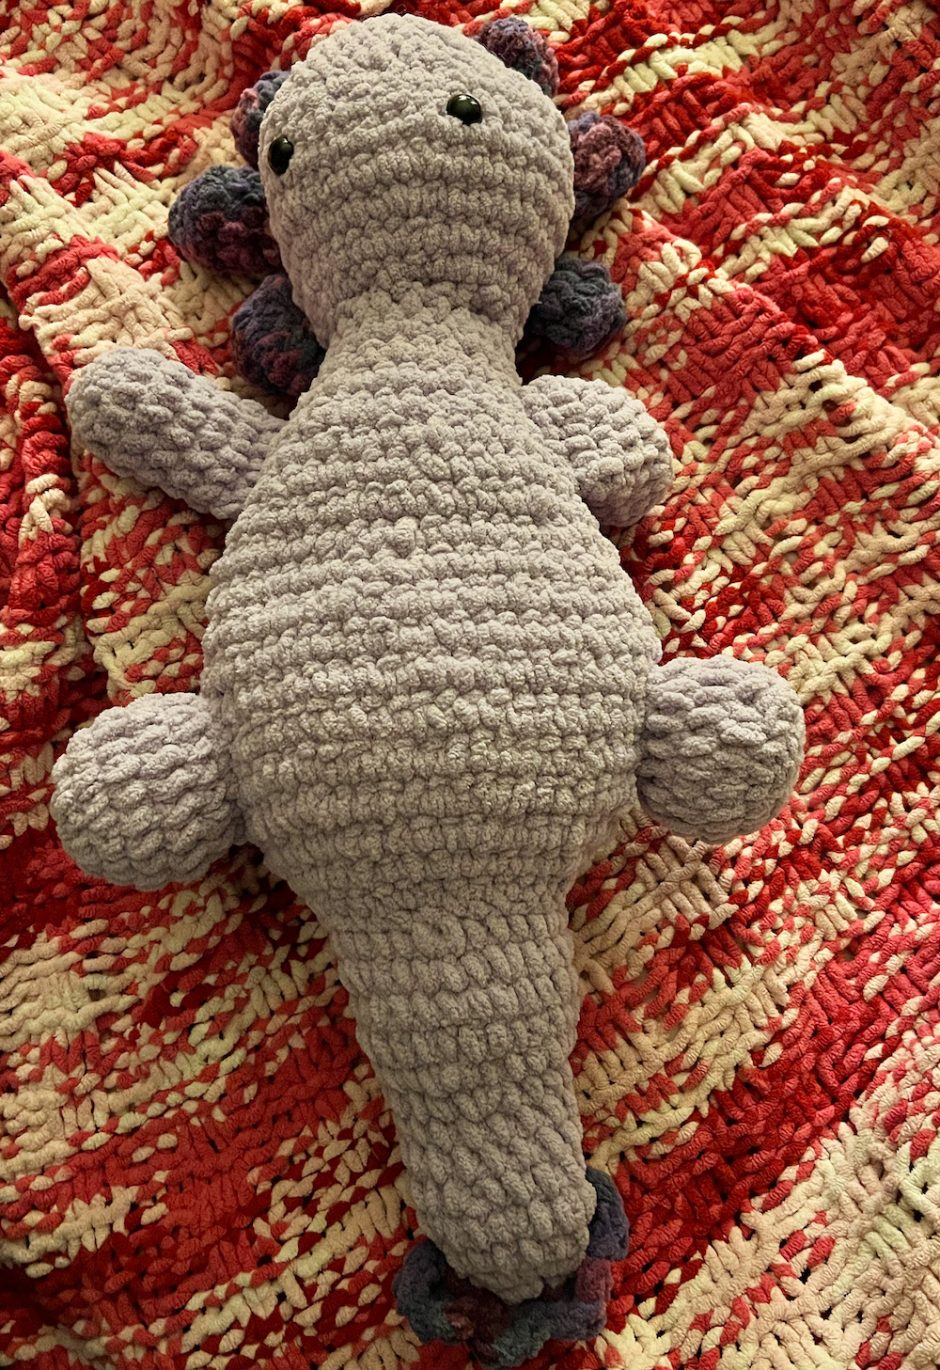 Axolotl chunky amigurumi crochet pattern by Lenn's Craft